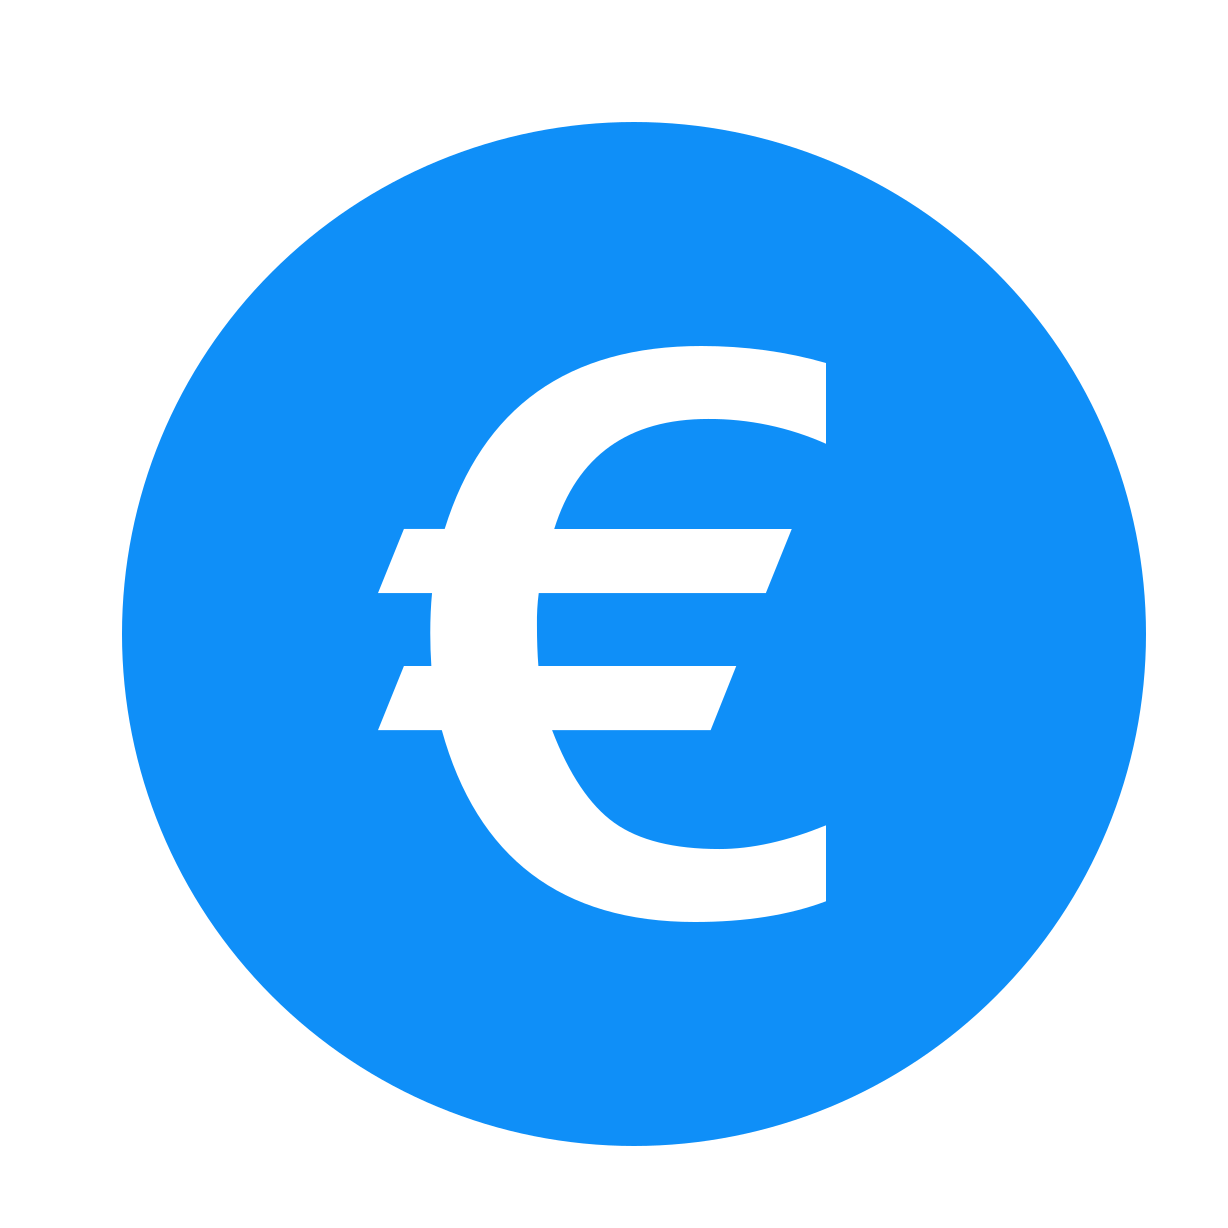 Euro Symbol PNG Transparent